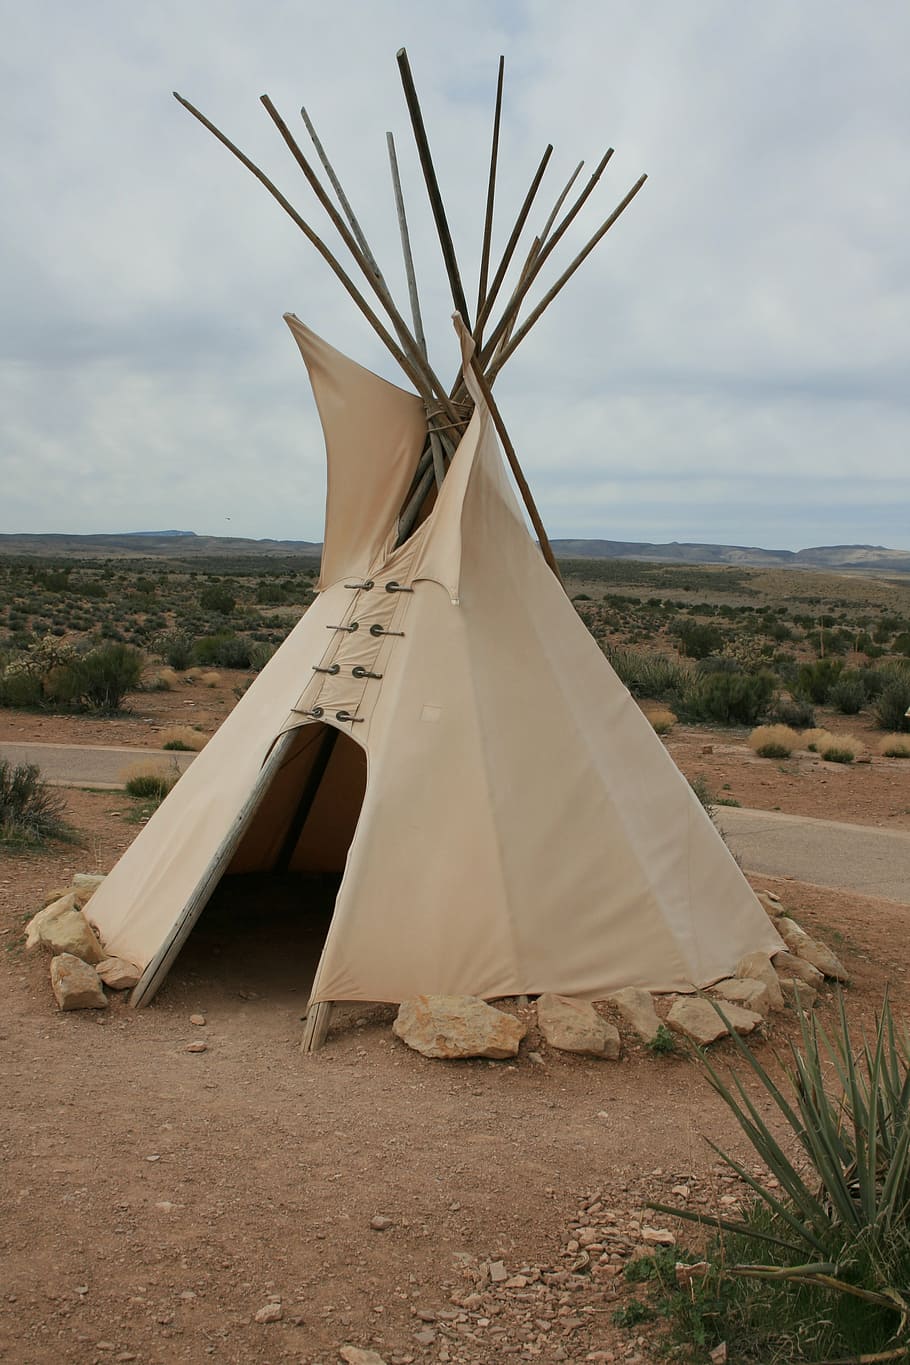 beige, brown, outdoor, tipi tent, daytime, tee pee, native american, tent, western, tee-pee